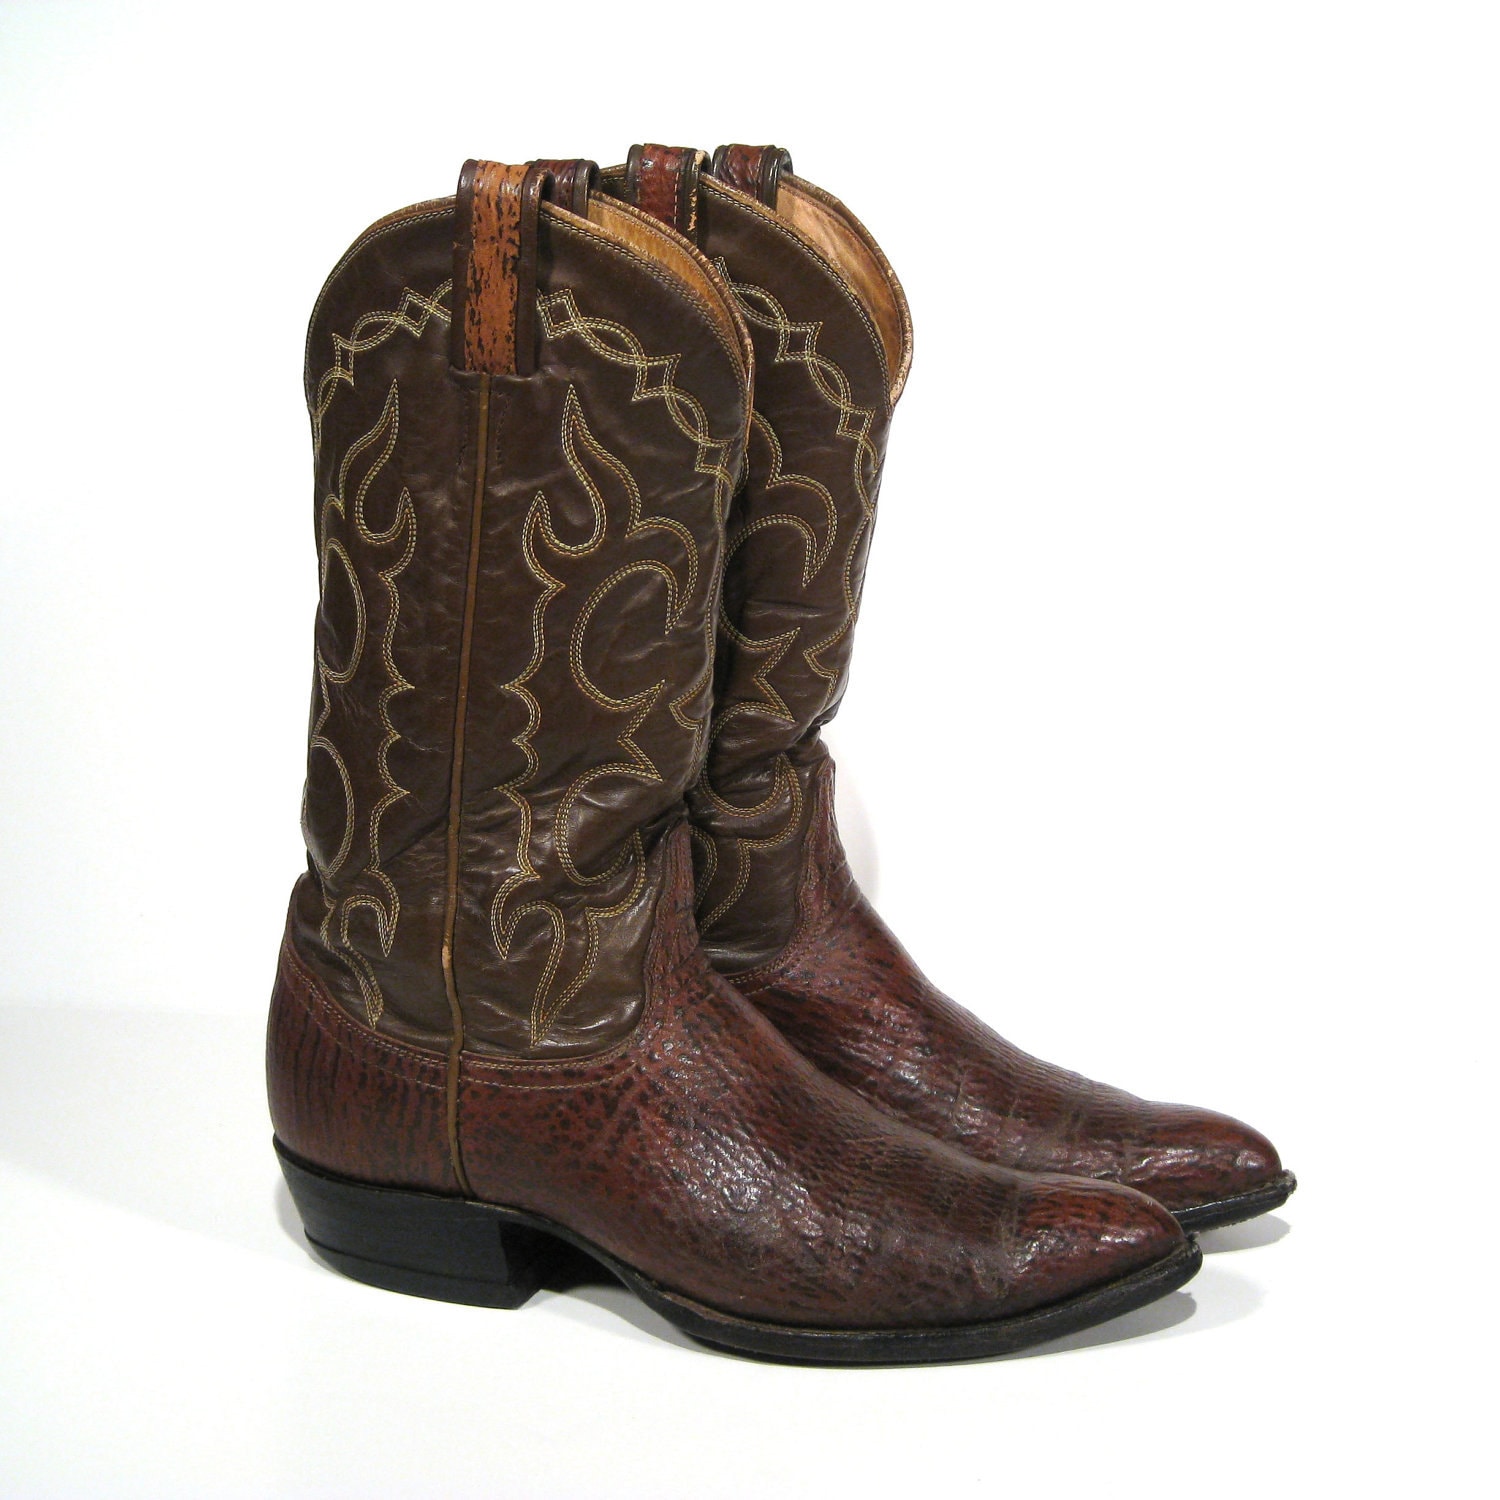 Vintage Men's Cowboy Boots 9 1/2 B Tony Lama by TexasBootExchange